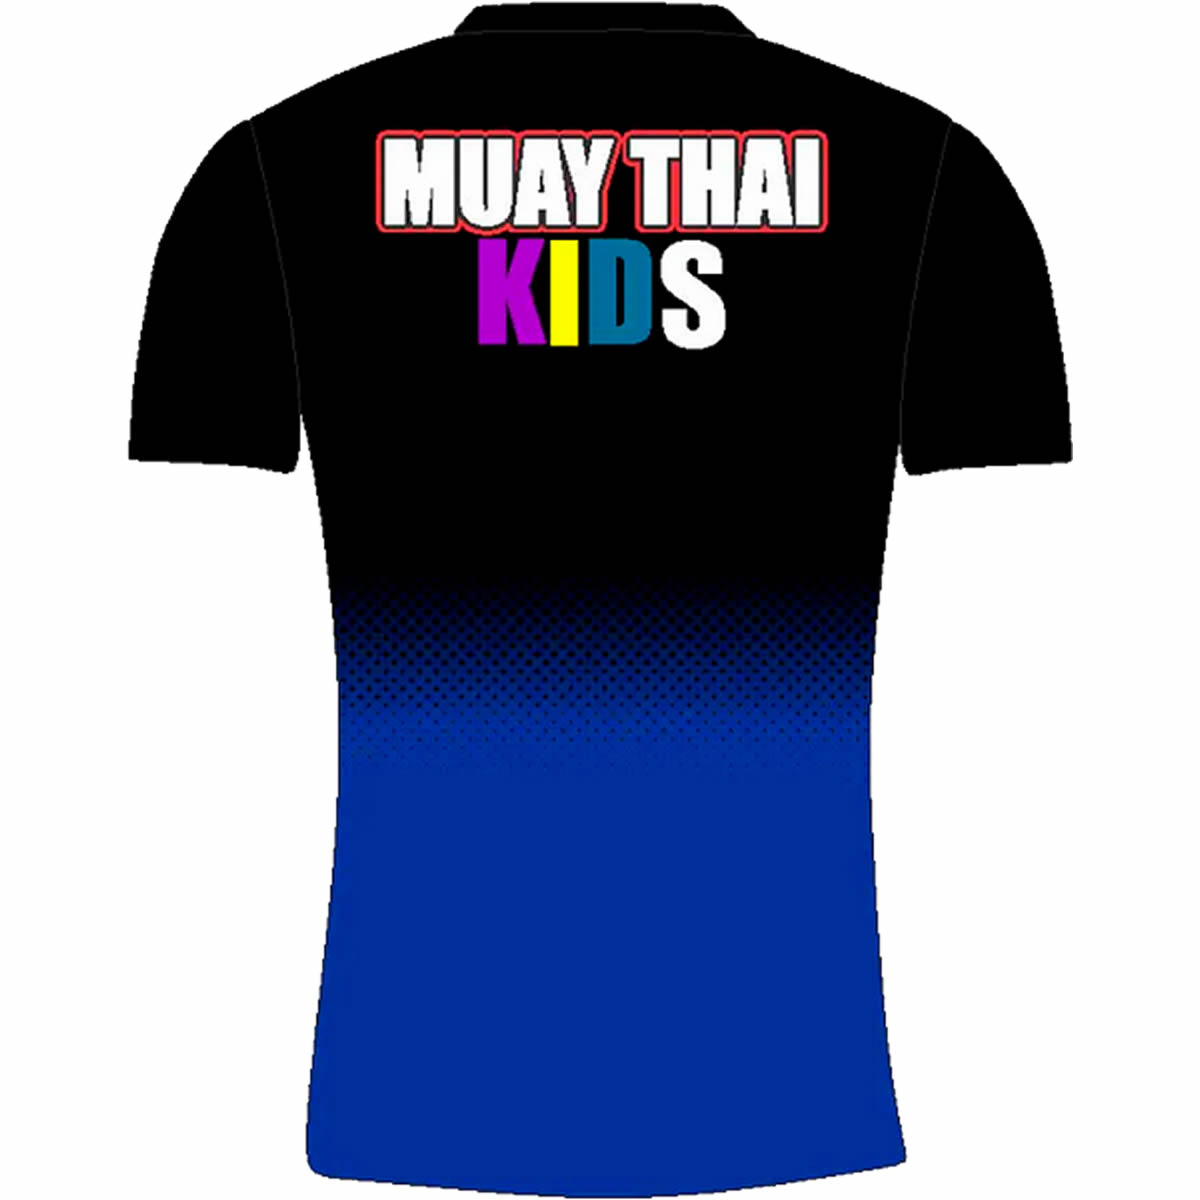 Camisa Camiseta Muay Thai Kids Masc Infantil - Fb2069 - Fbr  - Loja do Competidor